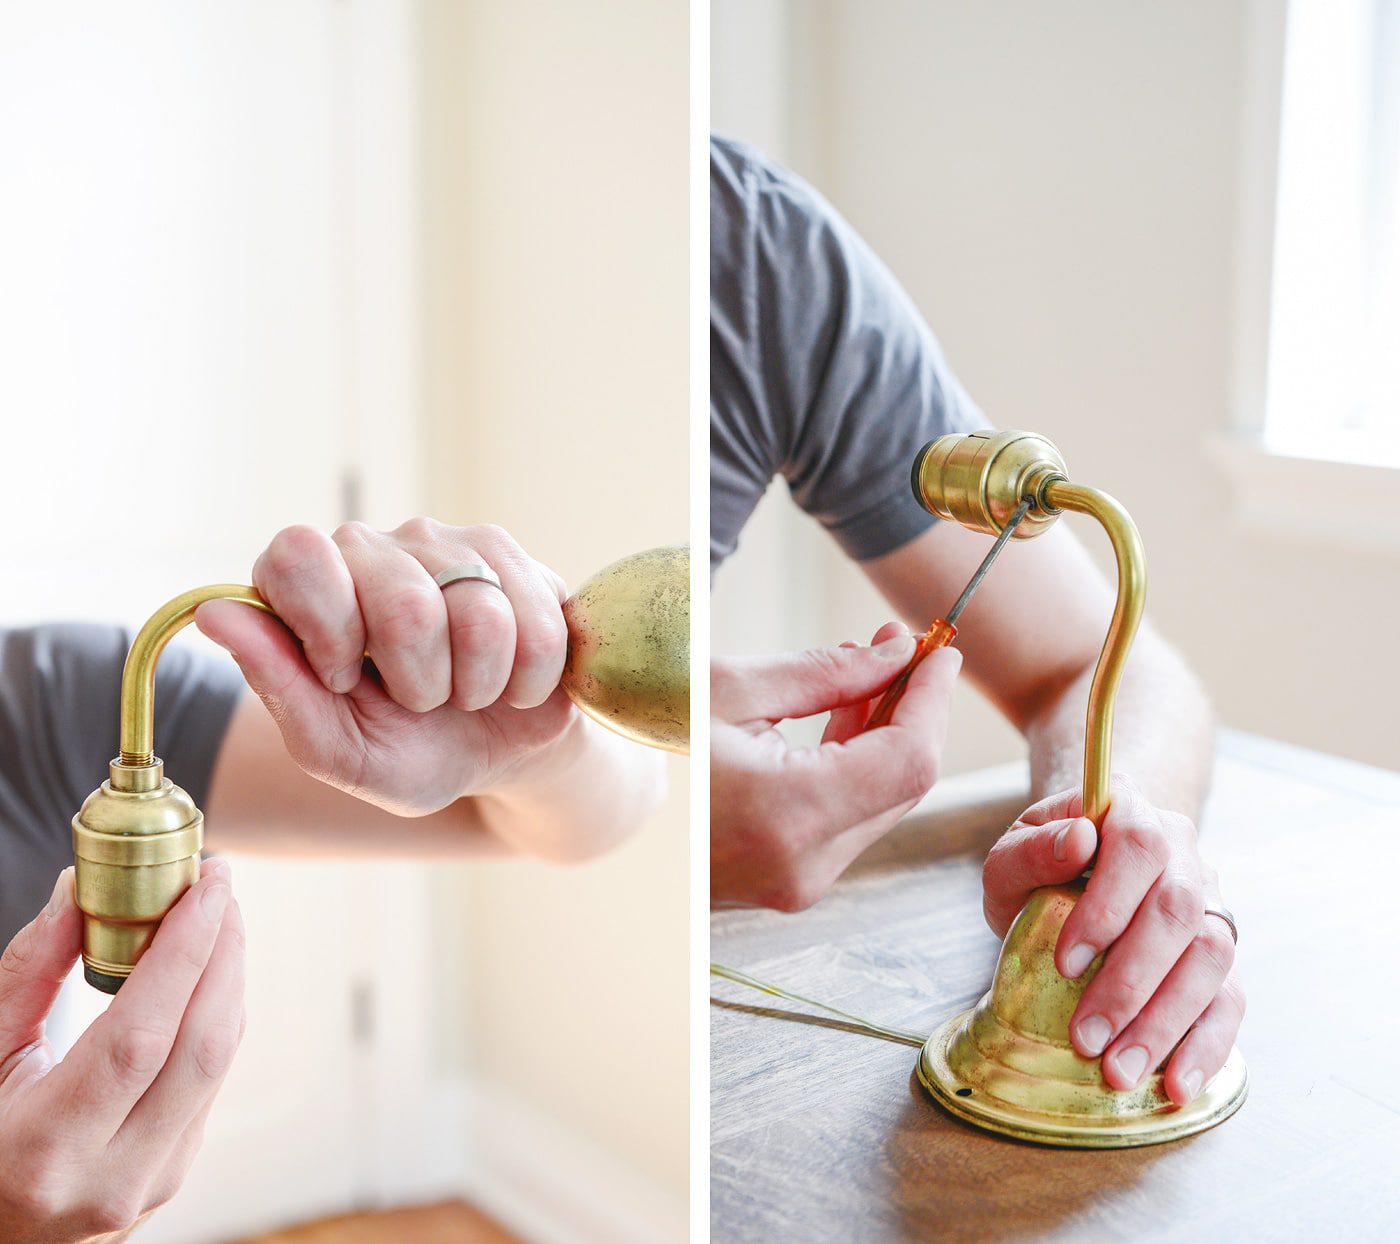 How to restore a brass light fixture // via Yellow Brick Home